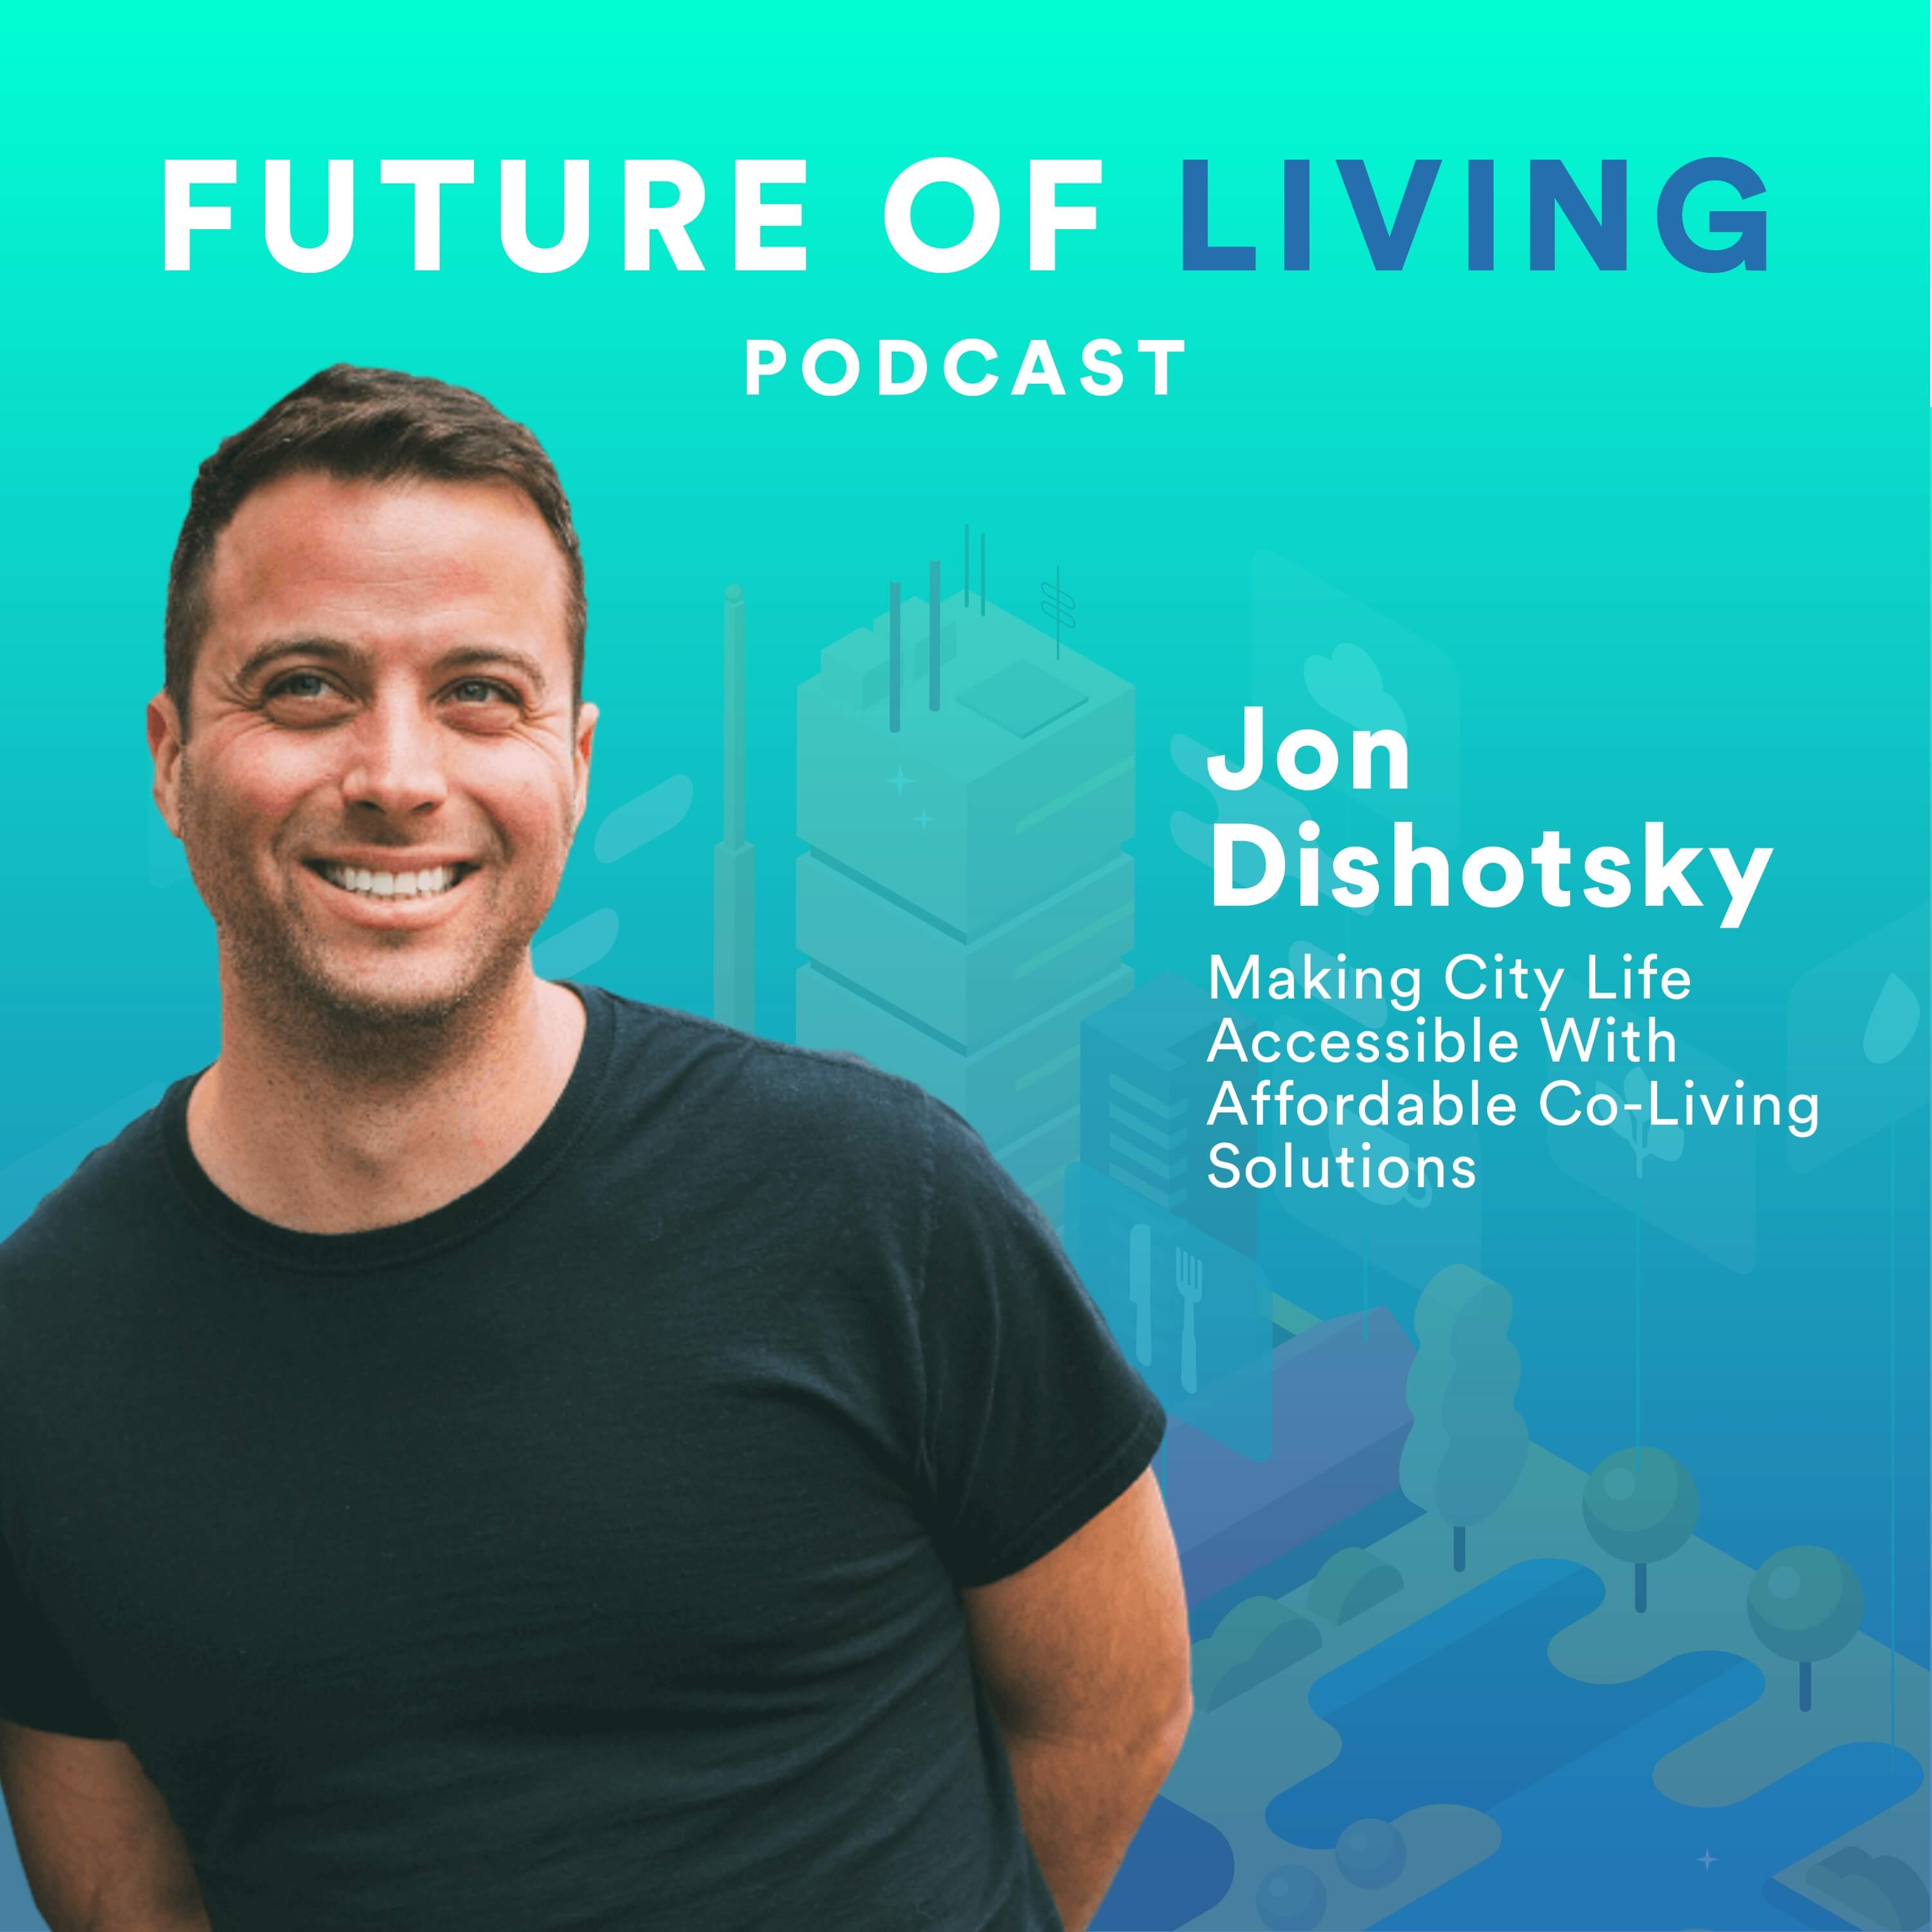 Jon Dishotsky CEO and co-founder of Starcity